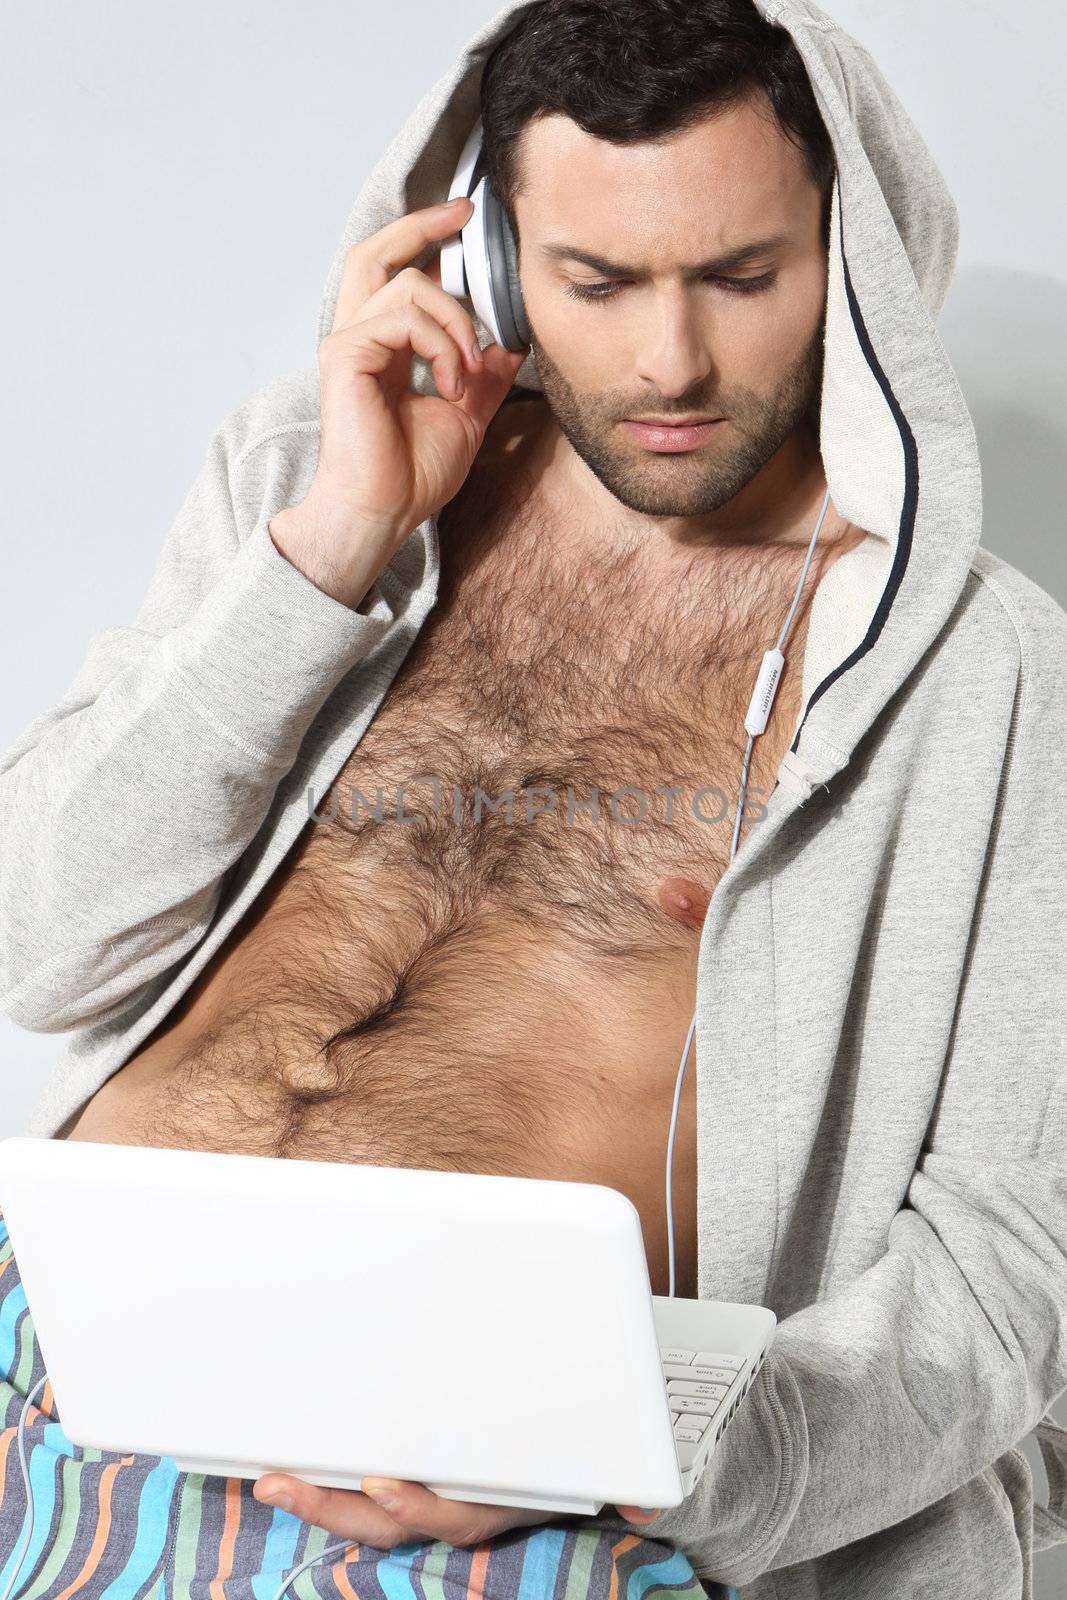 Stylish man listening to music on a gray background by robert_przybysz